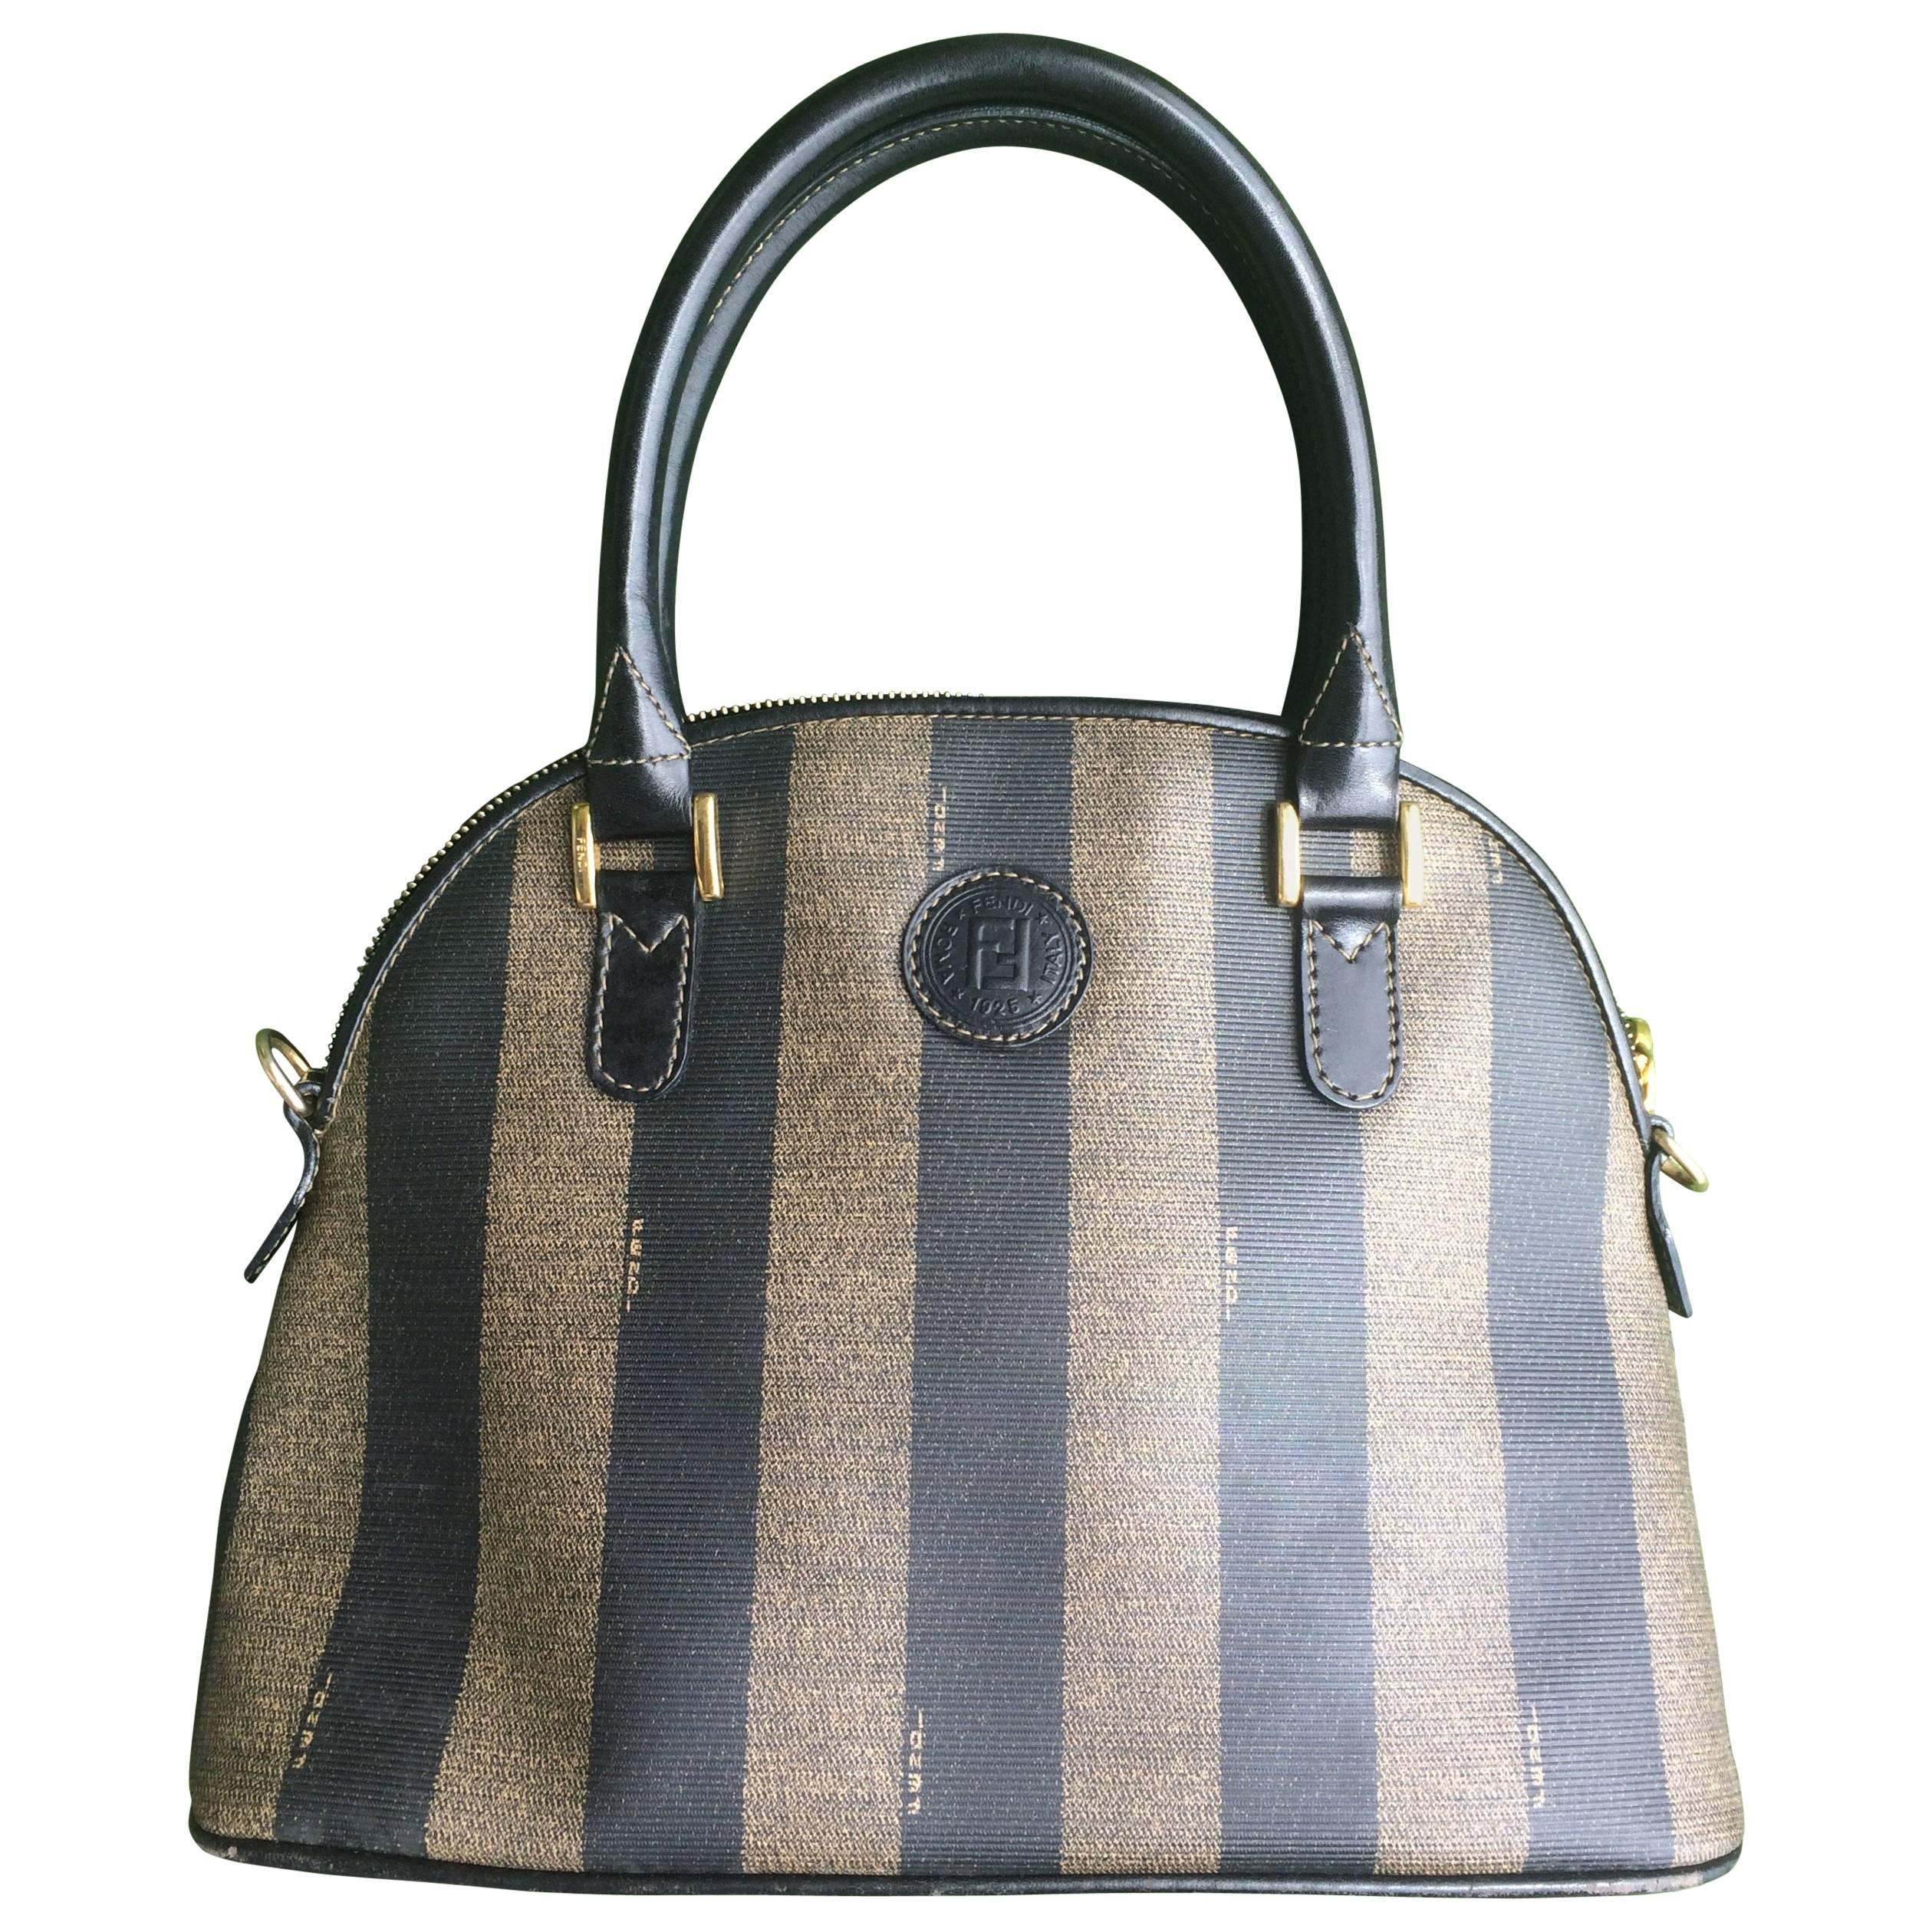 Vintage FENDI classic black and grey pecan vertical stripe bolide shape handbag.